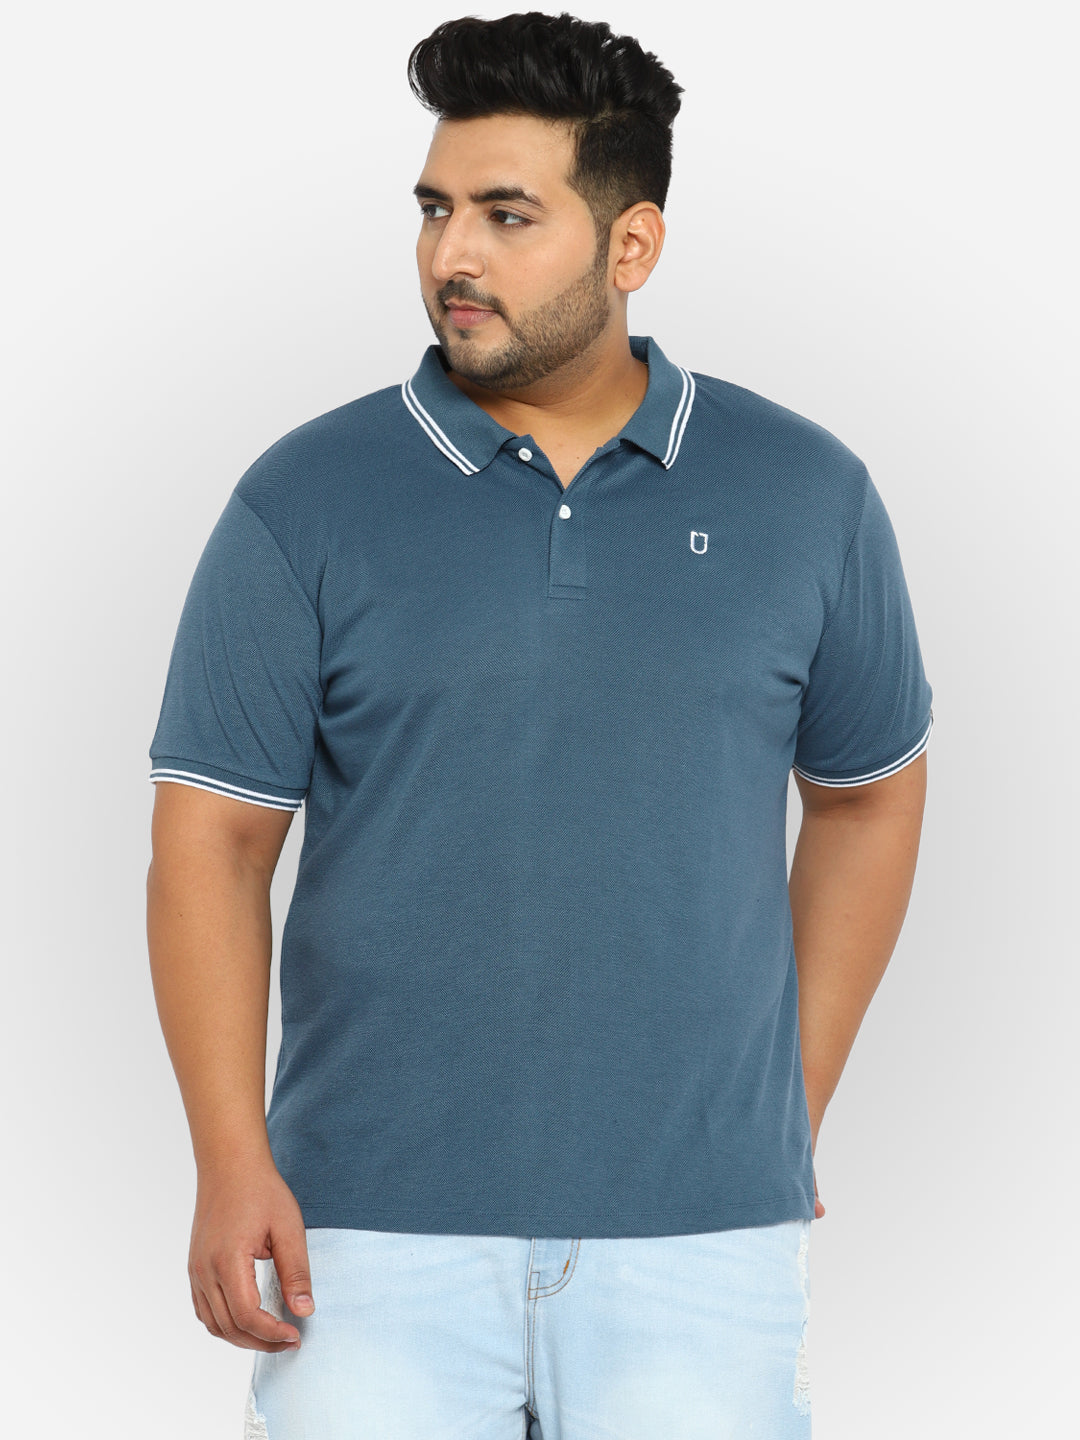 Plus Men's Dark Grey Solid Regular Fit Half Sleeve Cotton Polo T-Shirt